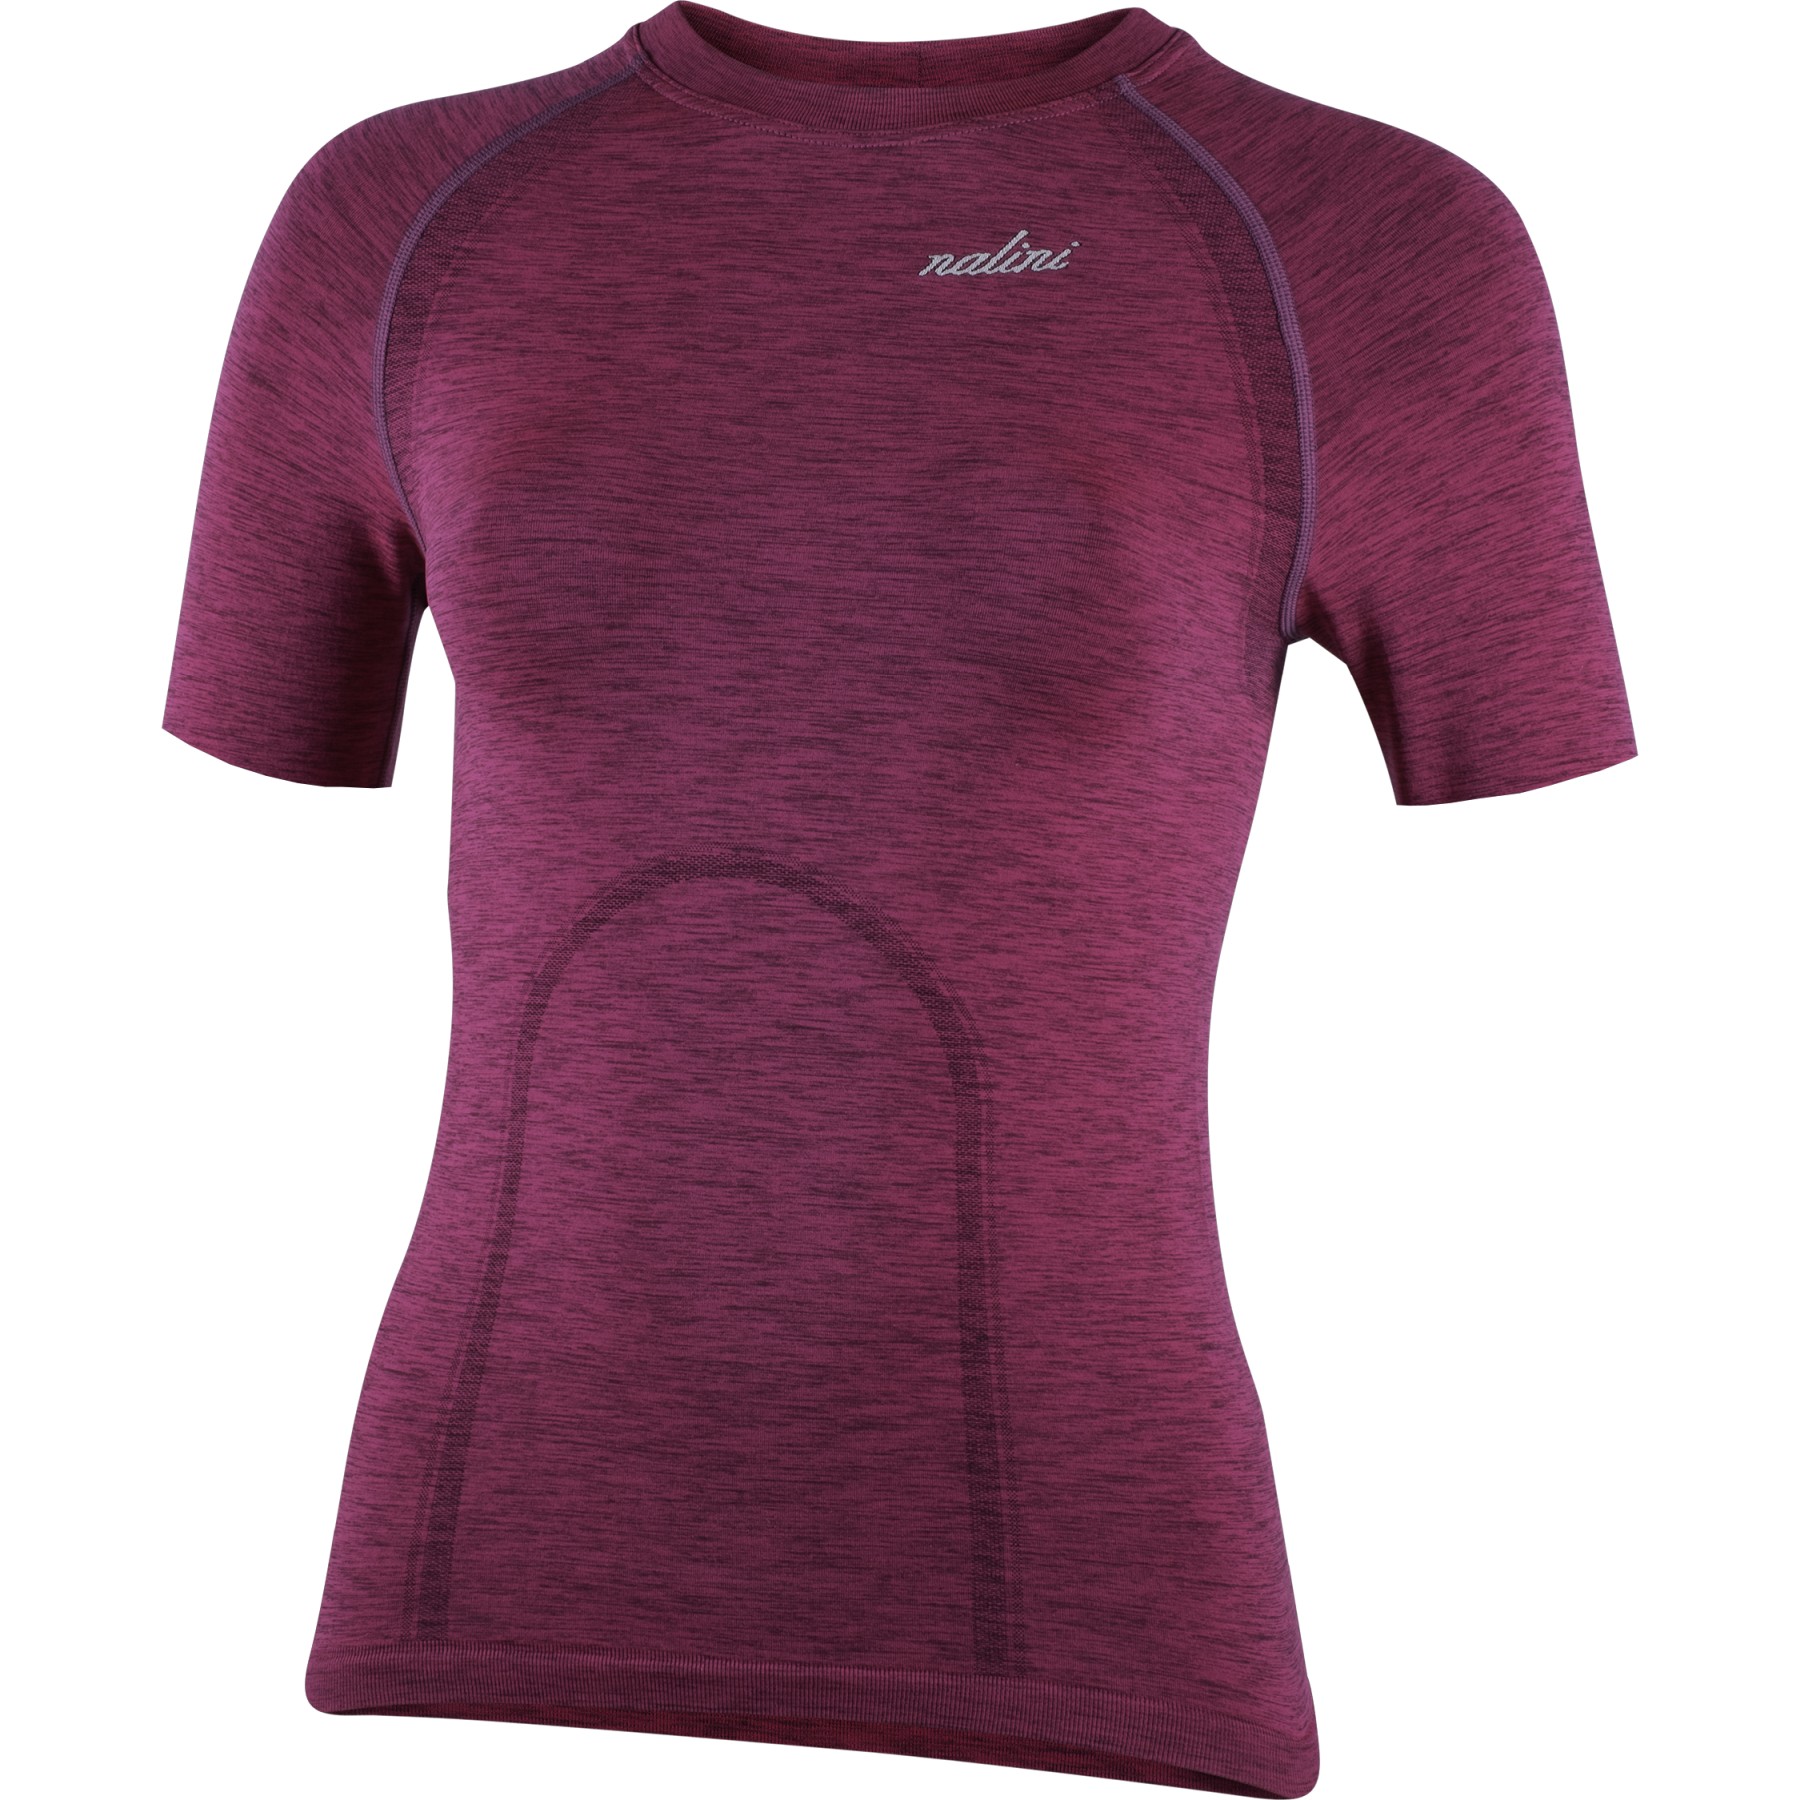 Productfoto van Nalini Melange Lady Short Sleeve Shirt - cyclamen pink melange 4100